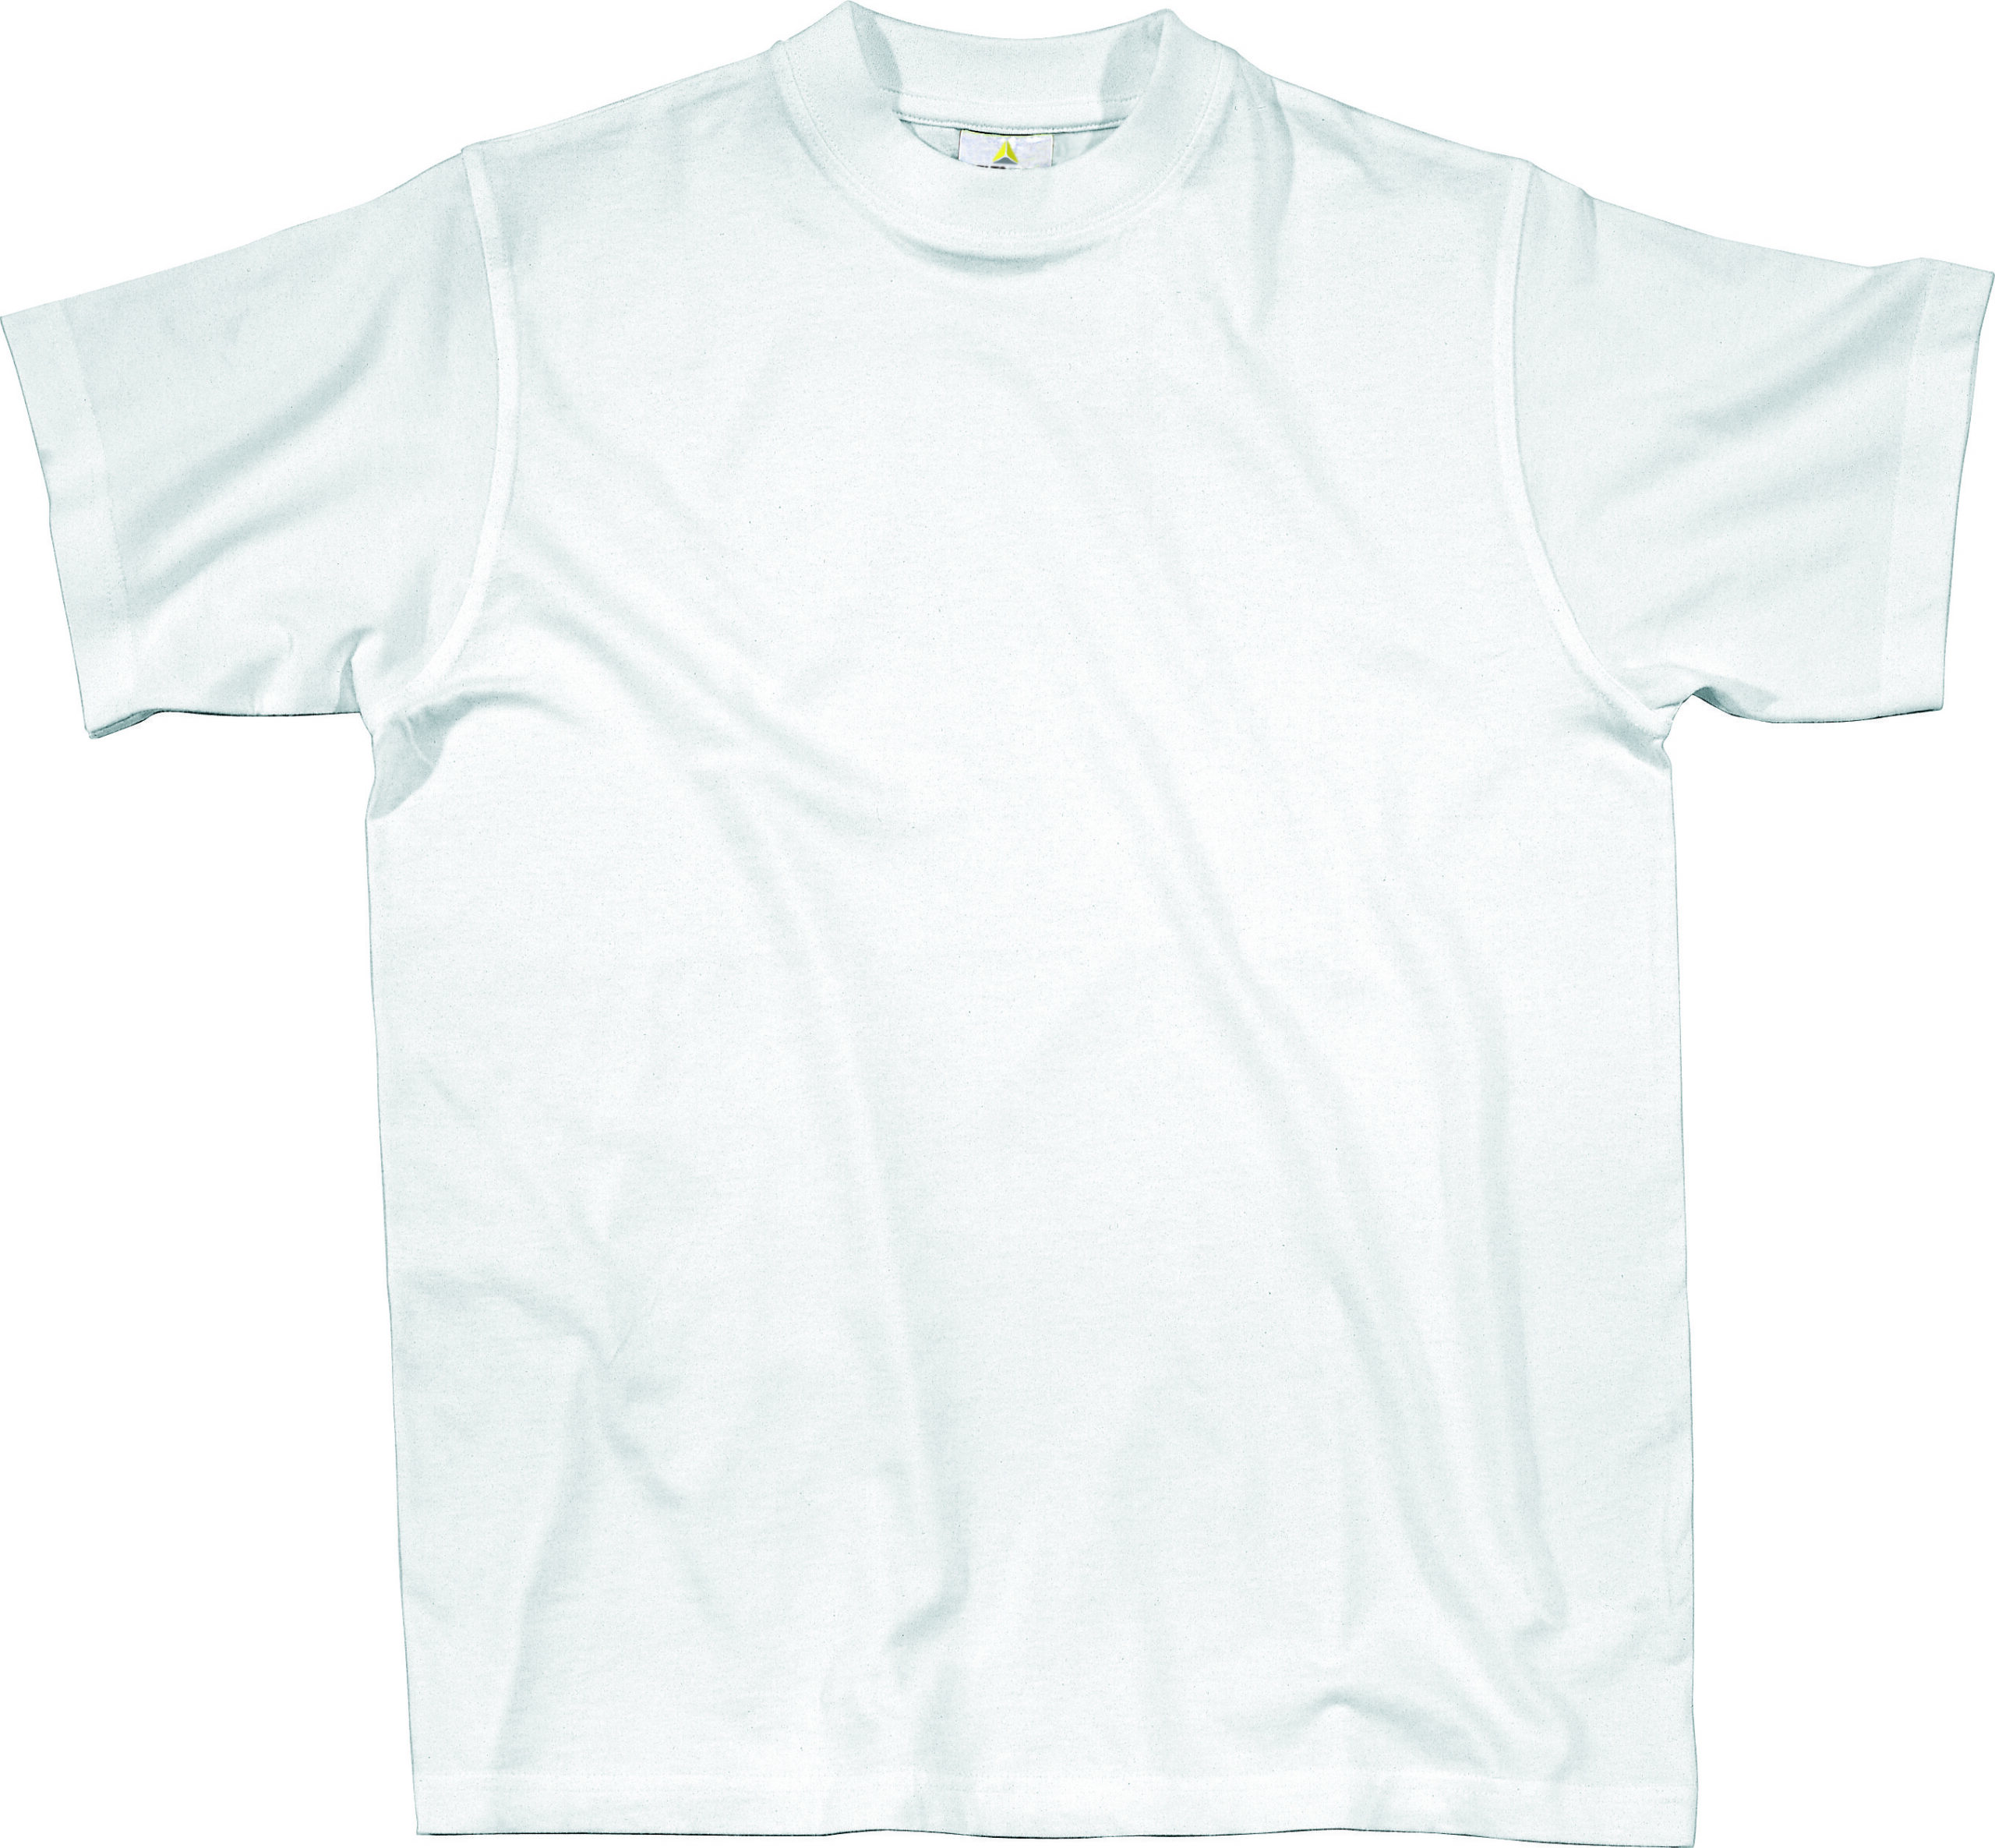 T Shirt Basic Napoli Bianco Tg L 100 Cotone Napolbcgt 3295249116064